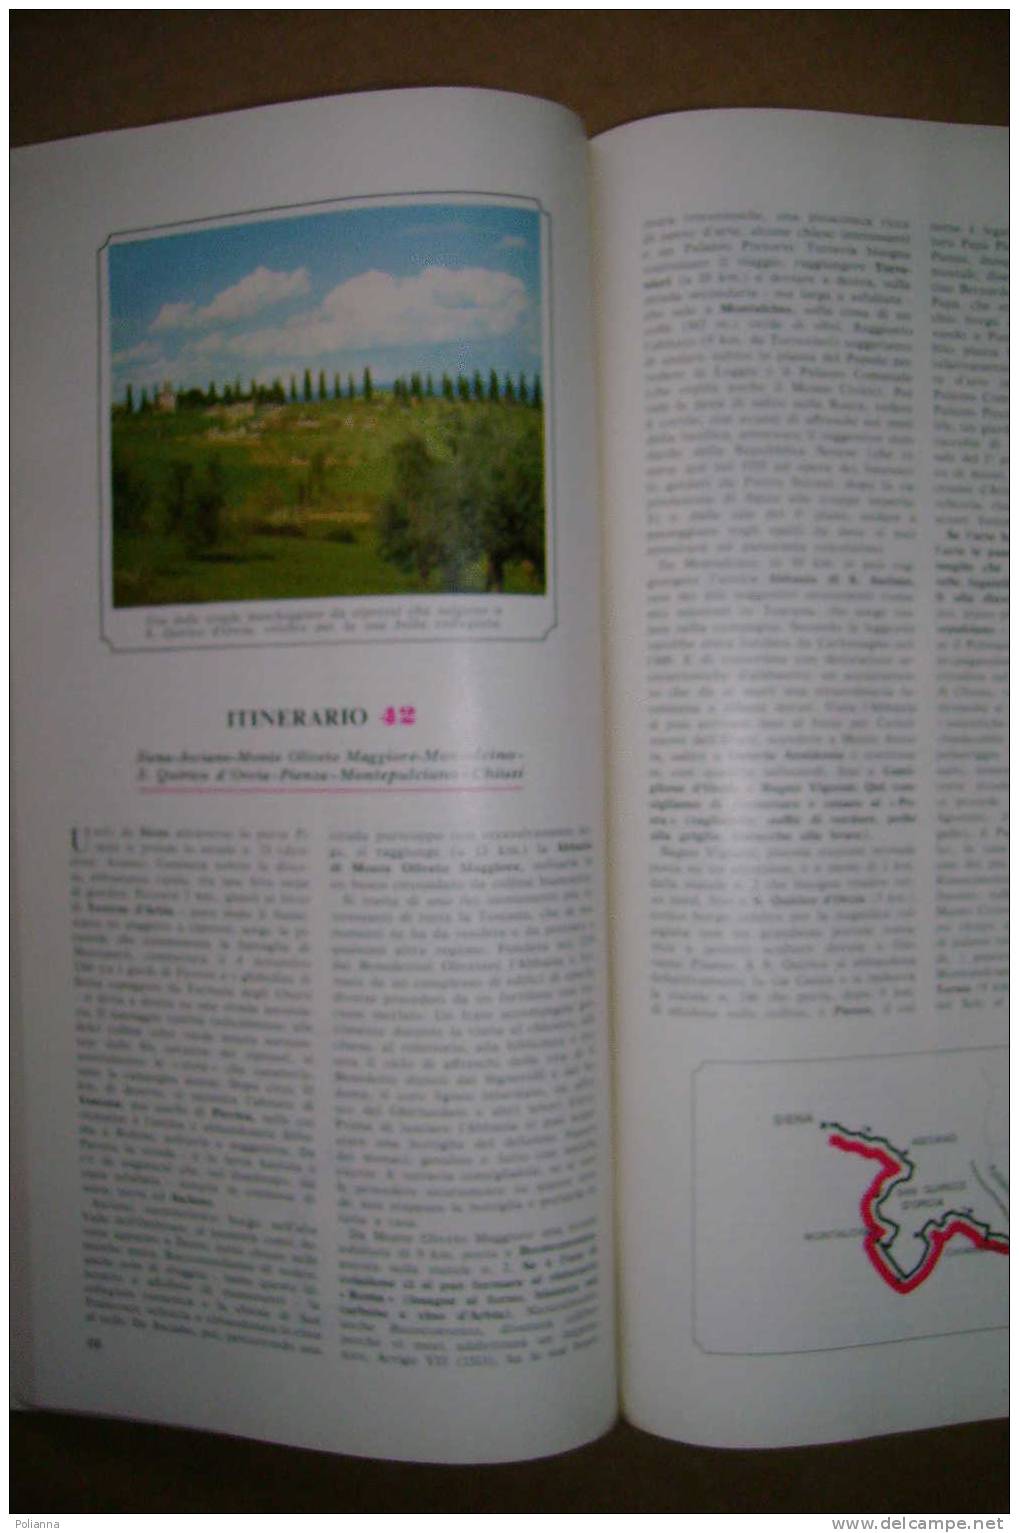 PDG/45 Grazia - IL LIBRO DEL TURISMO - 100 ITINERARI Mondadori 1965/Exilles/Oria/Solda/Chiusi/Subiaco/Cefalù/Castelsardo - Tourisme, Voyages